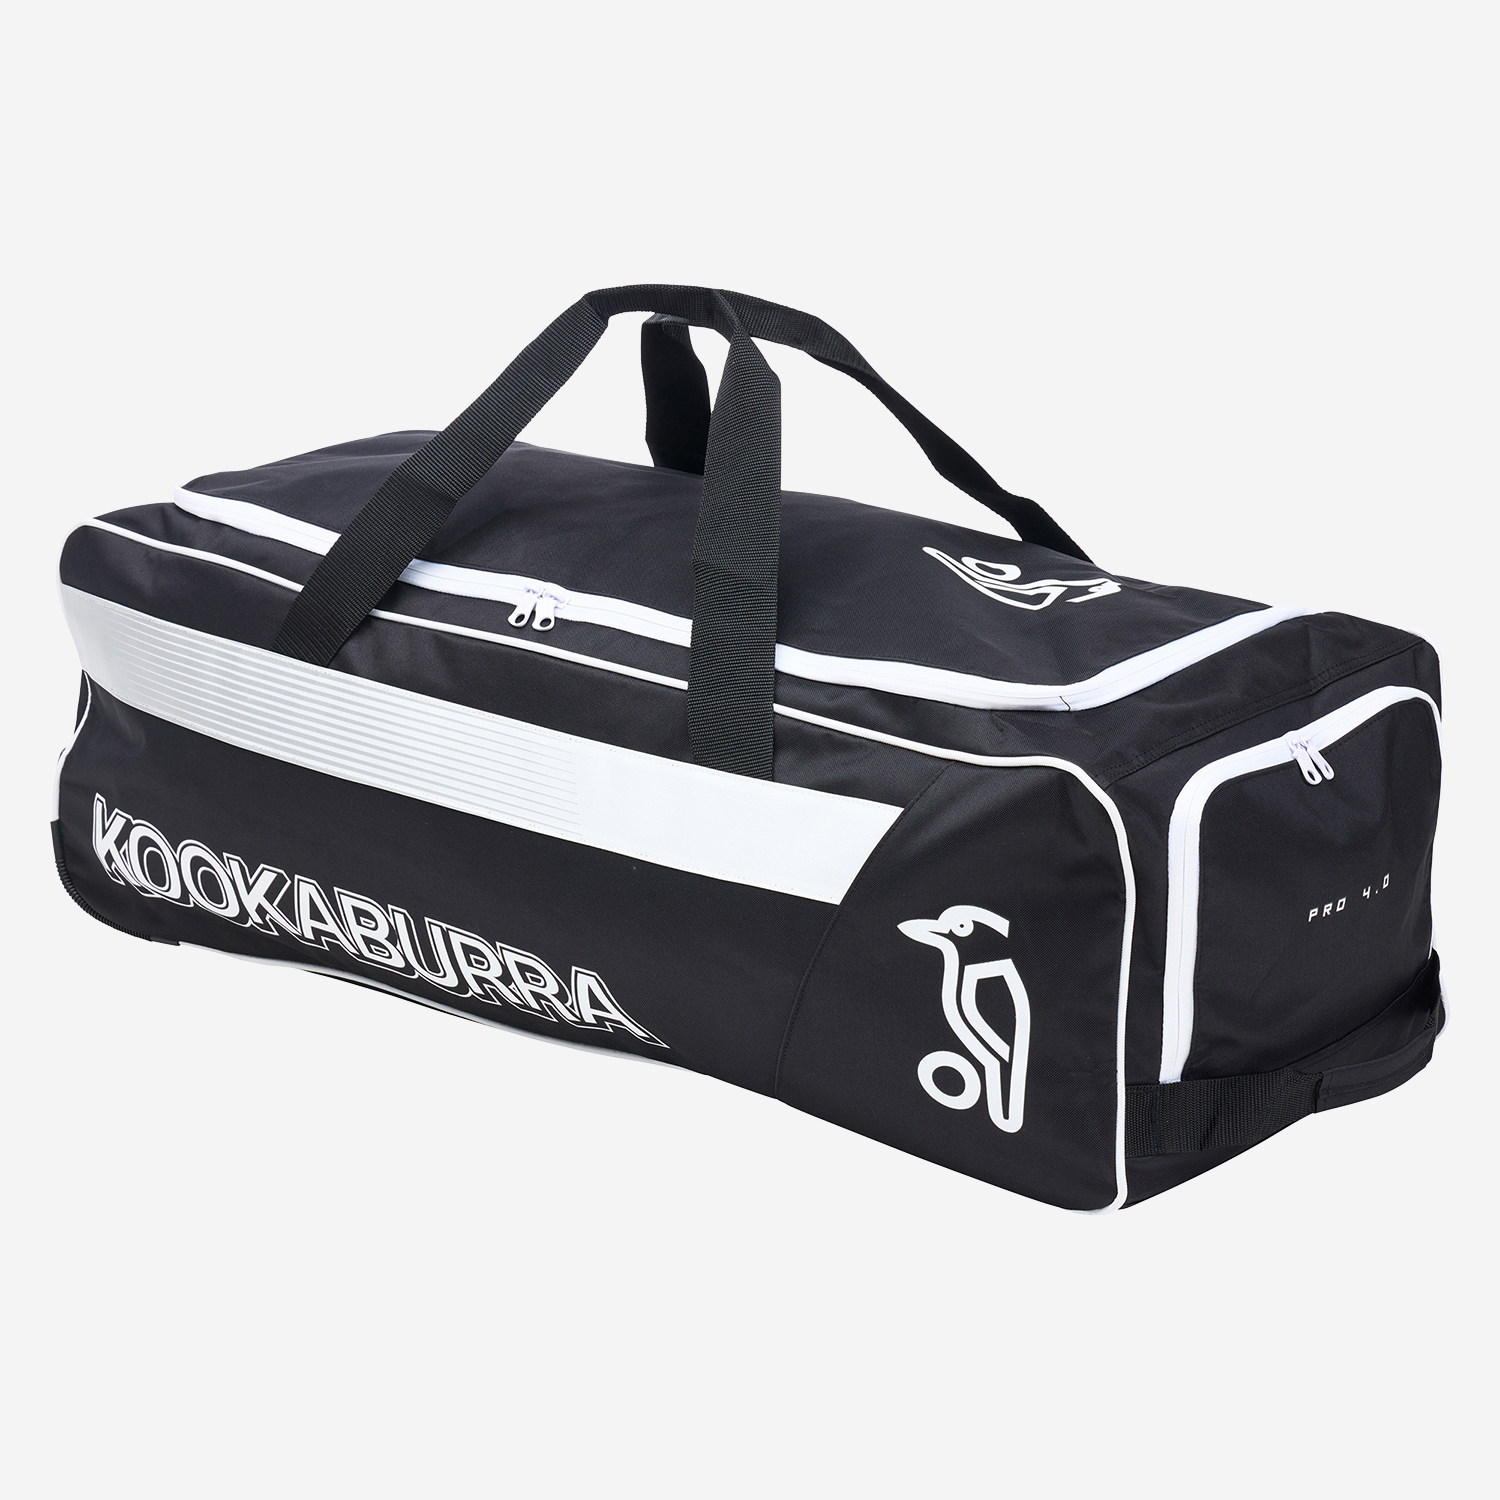 Pro 4.0 Cricket Wheelie Bags